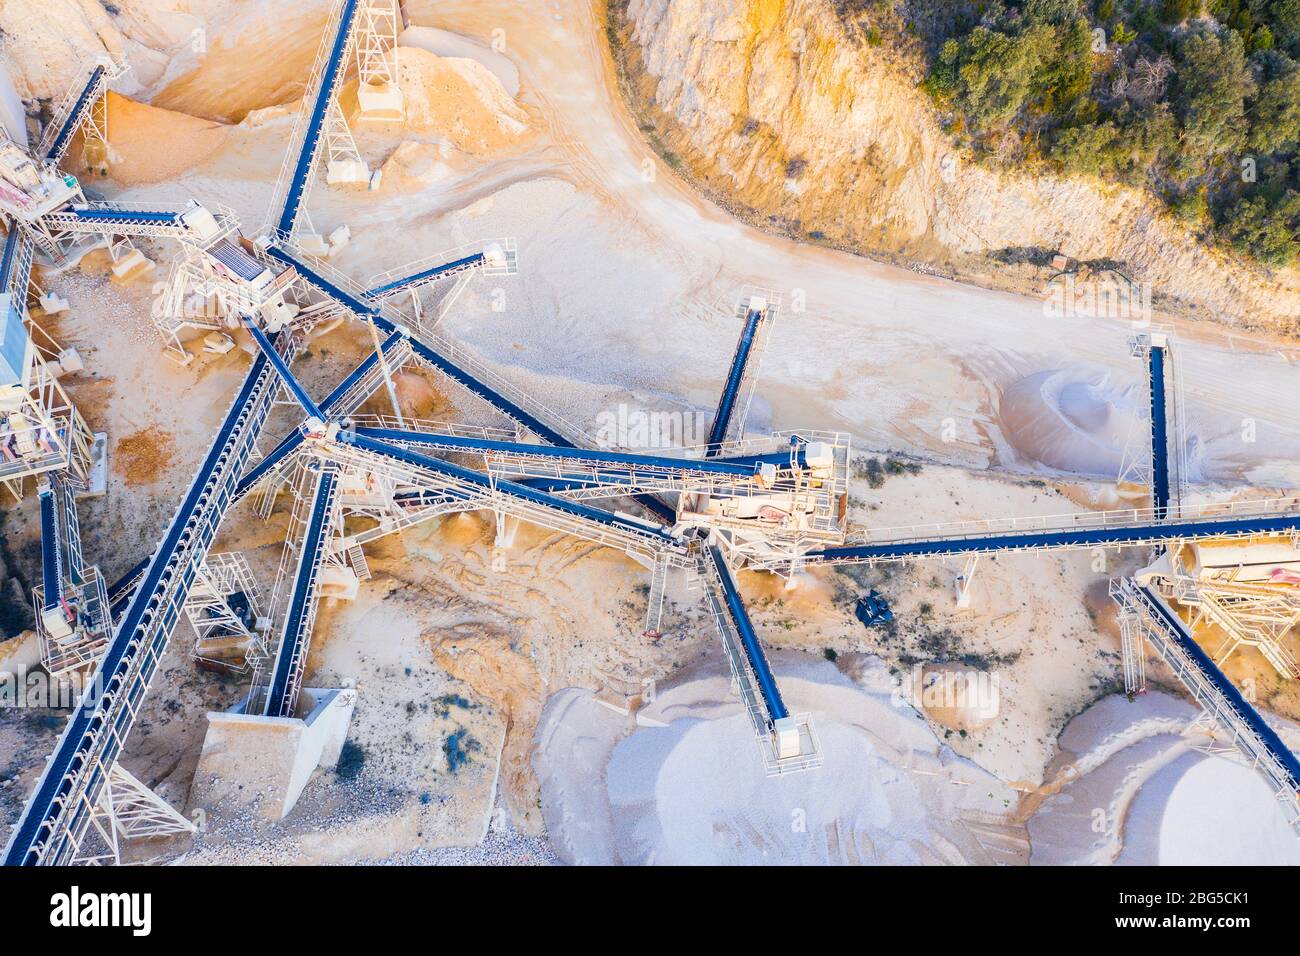 Quarry. Aerial view. Stock Photo